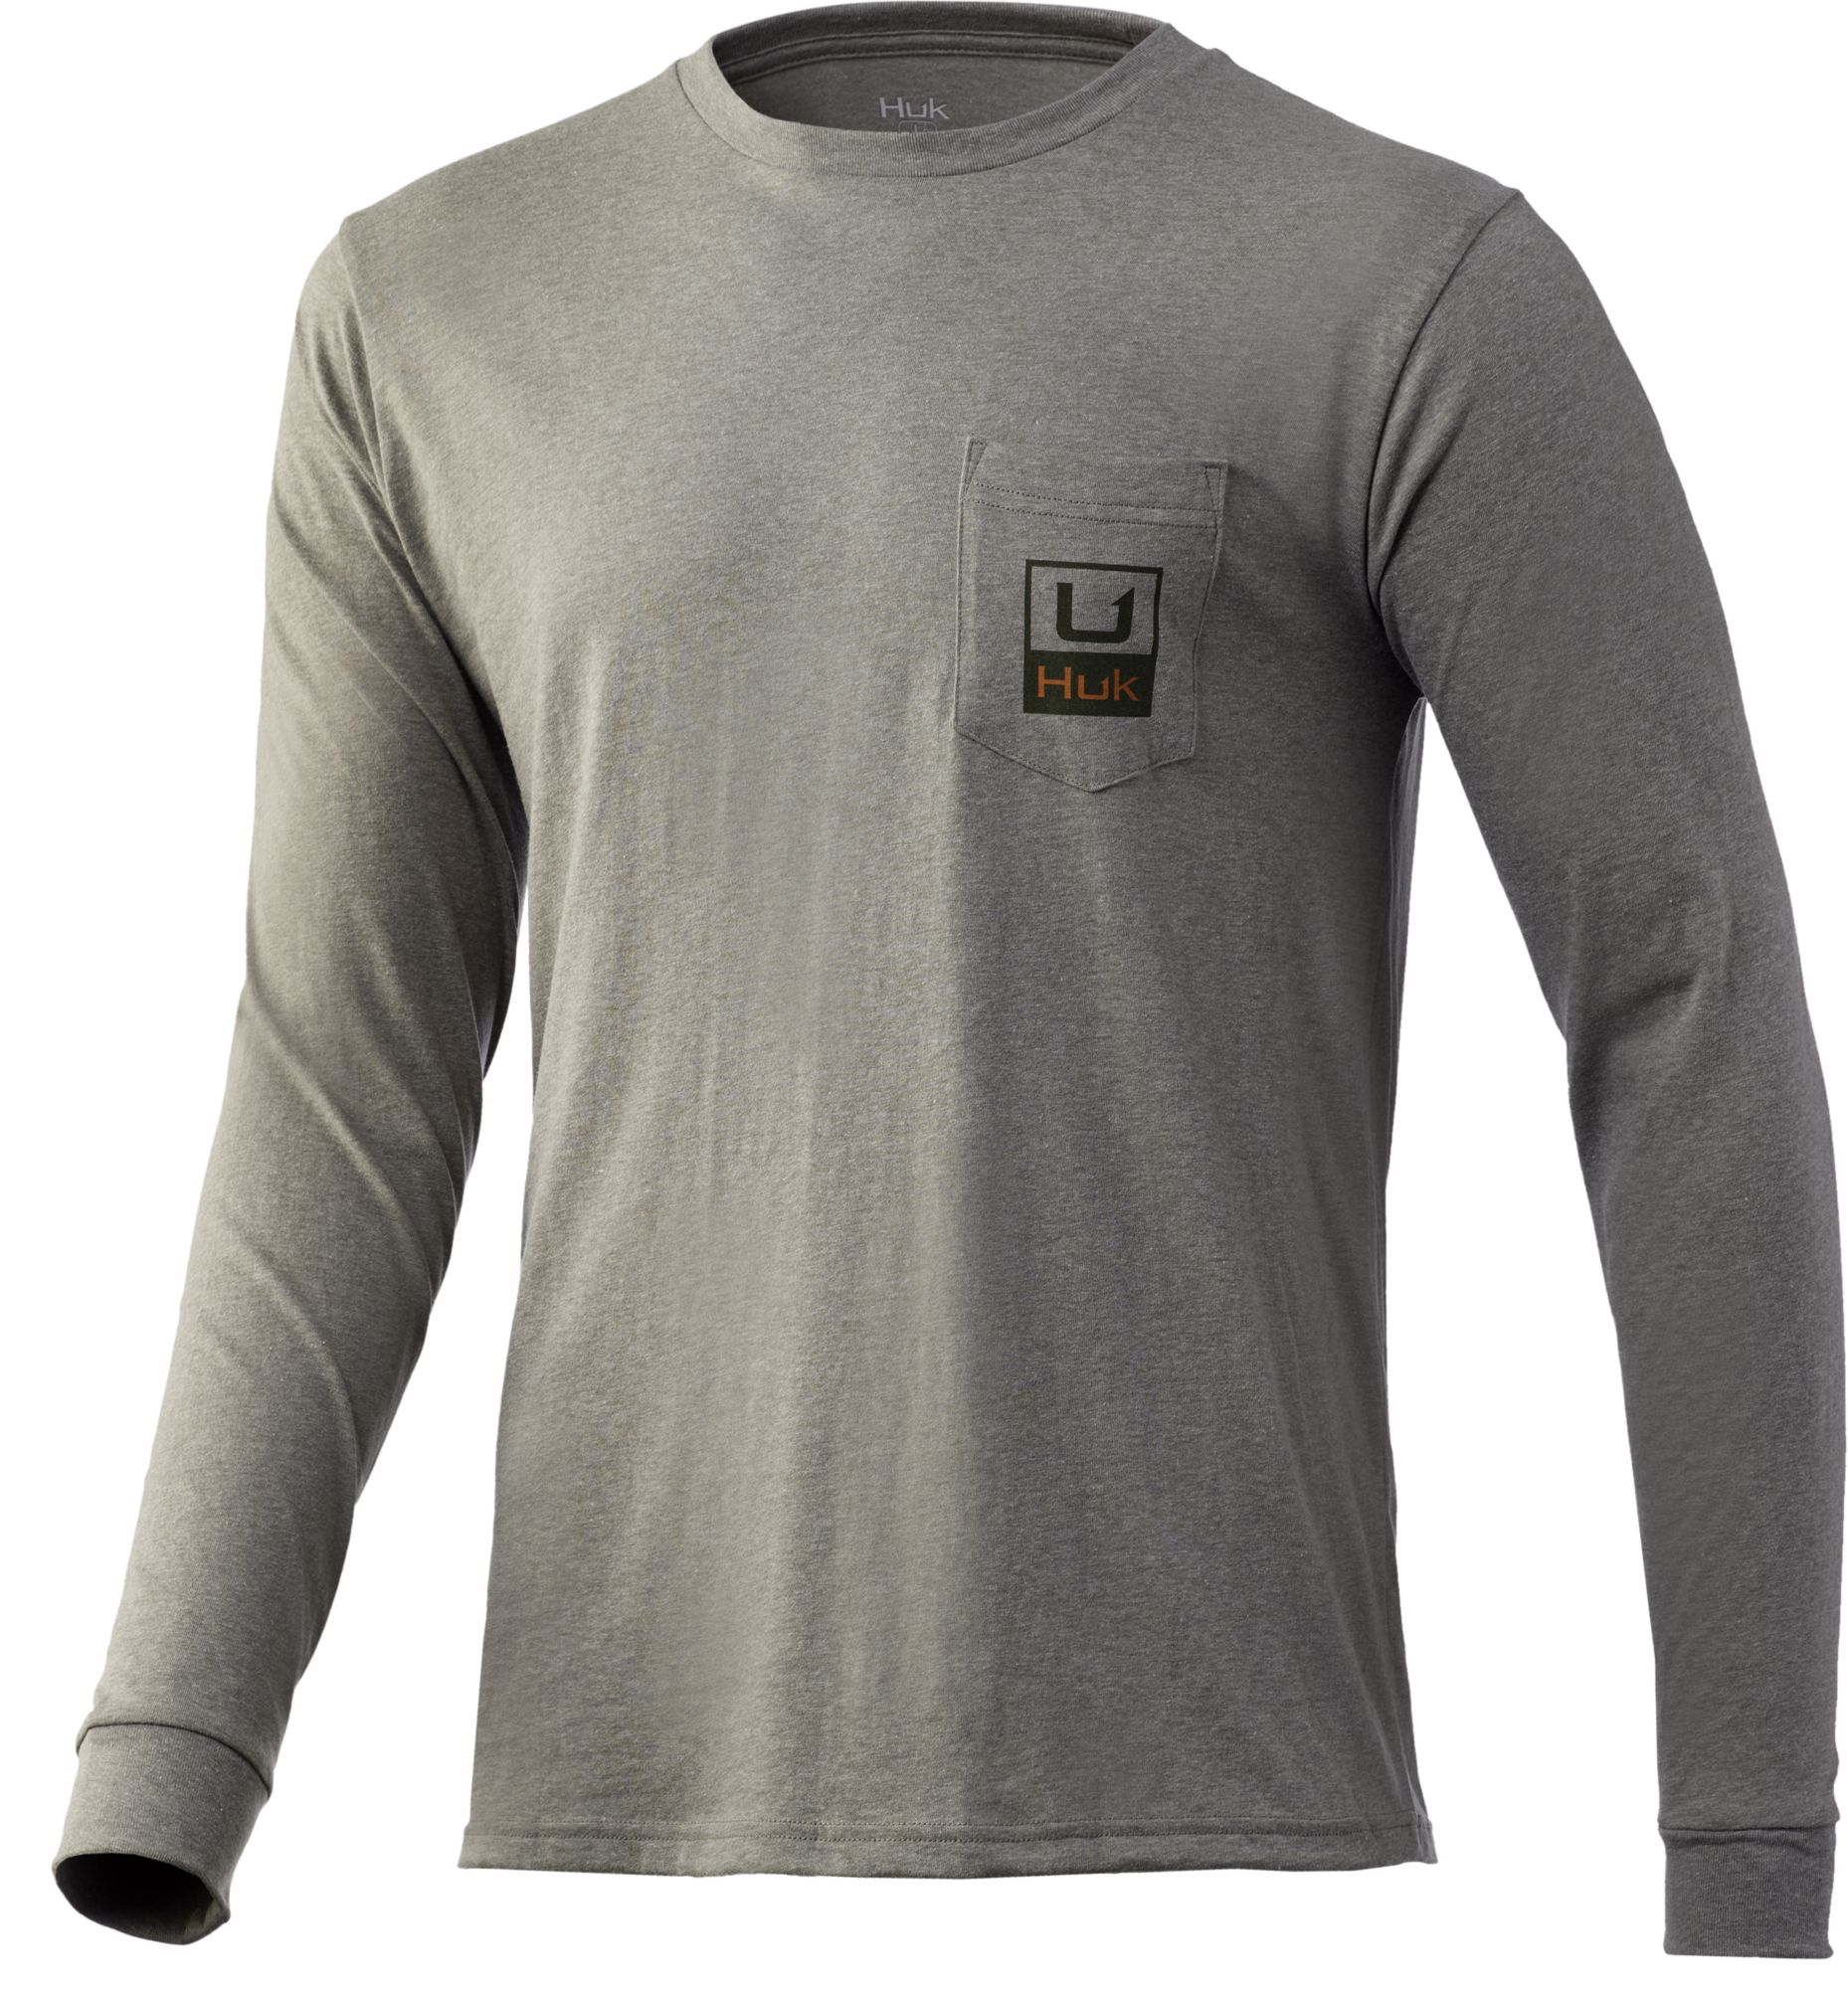 Dick's Sporting Goods Huk Men's Brand Box Long Sleeve T-Shirt